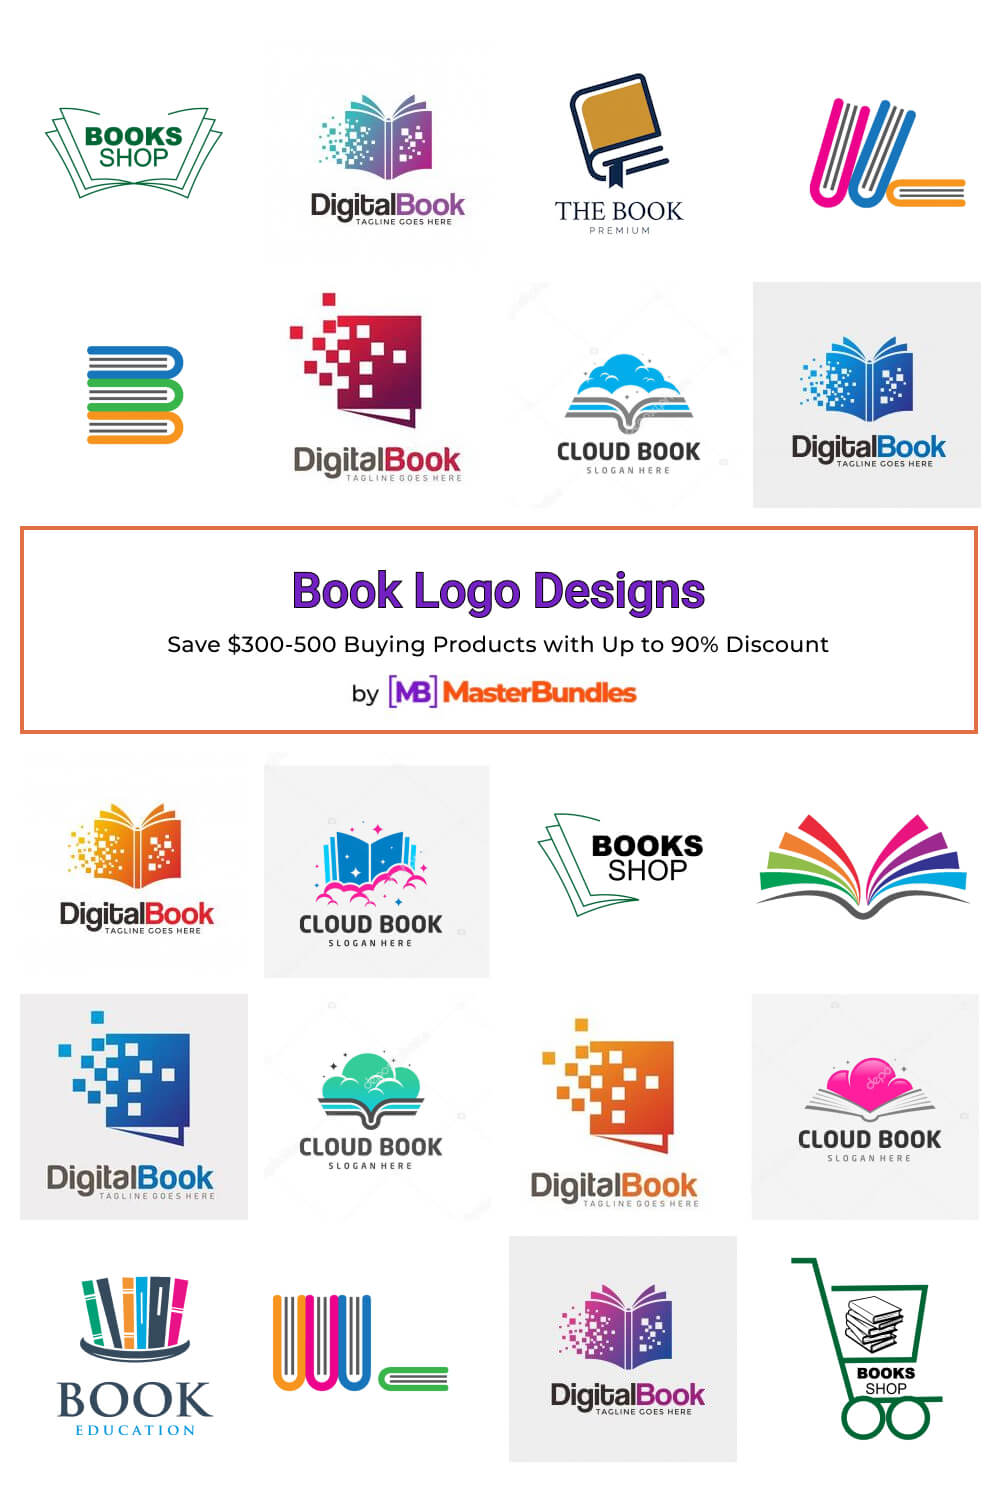 book logo designs pinterest image.